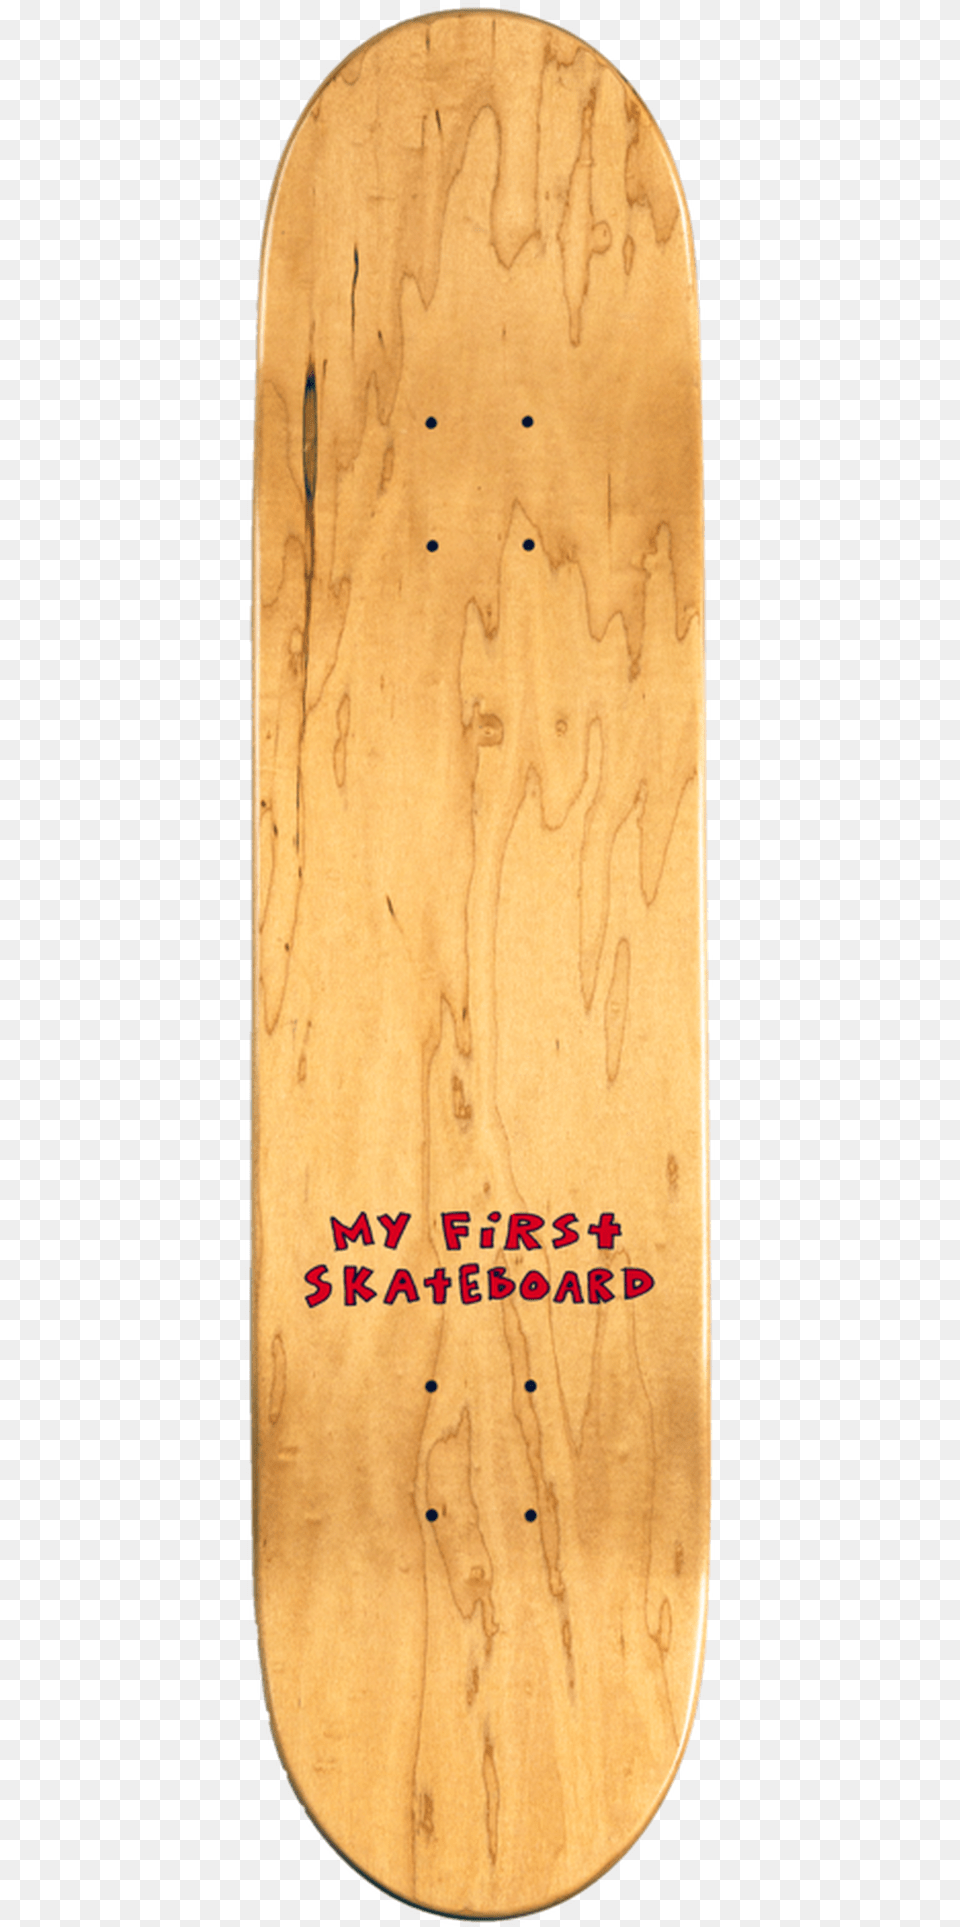 My First Skateboard Deck Skateboard Deck, Plywood, Wood Png Image